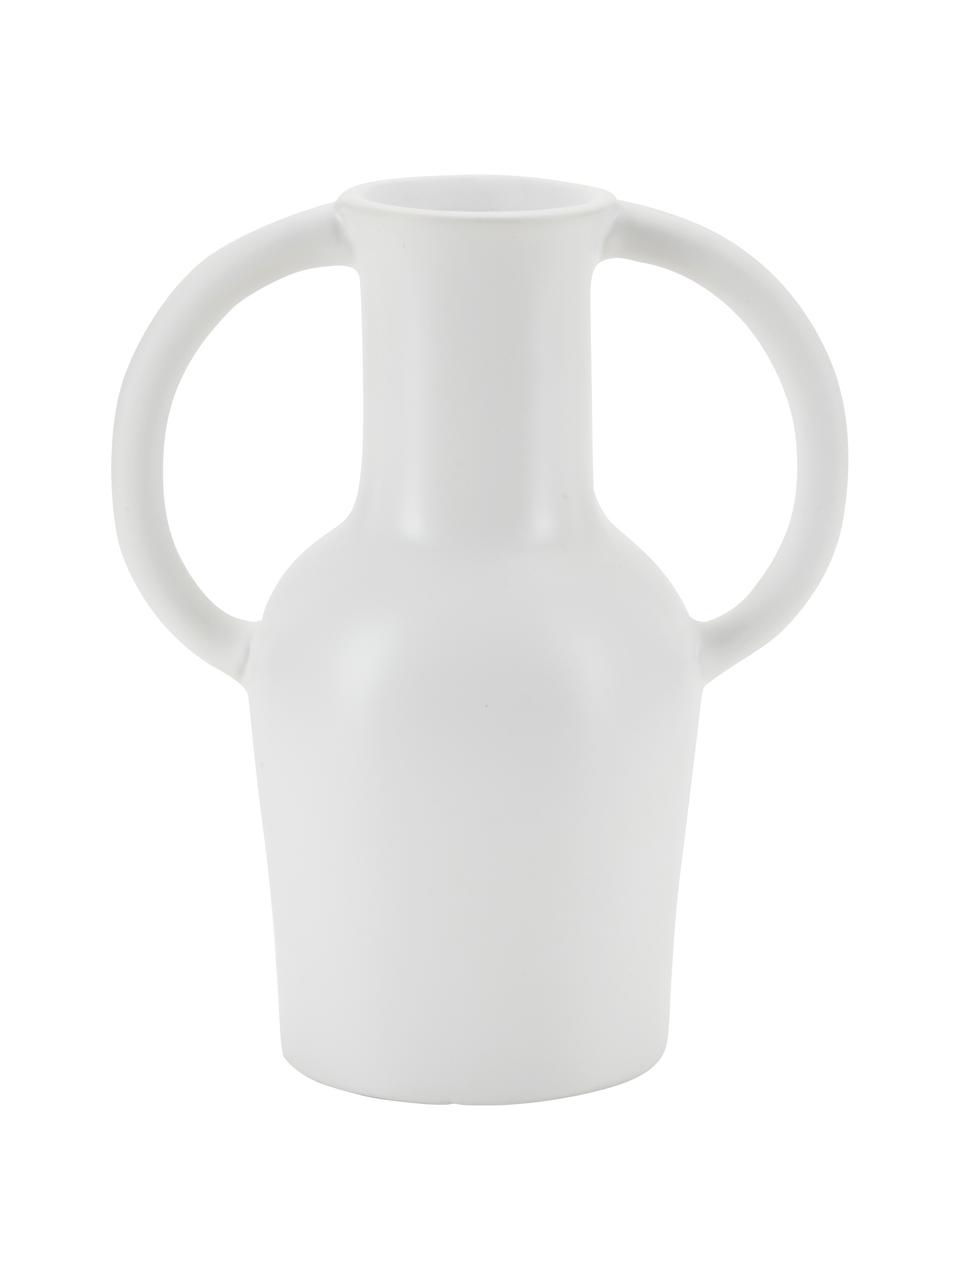 Vase grès cérame blanc Harmony, Grès cérame, Blanc, larg. 15 x haut. 18 cm